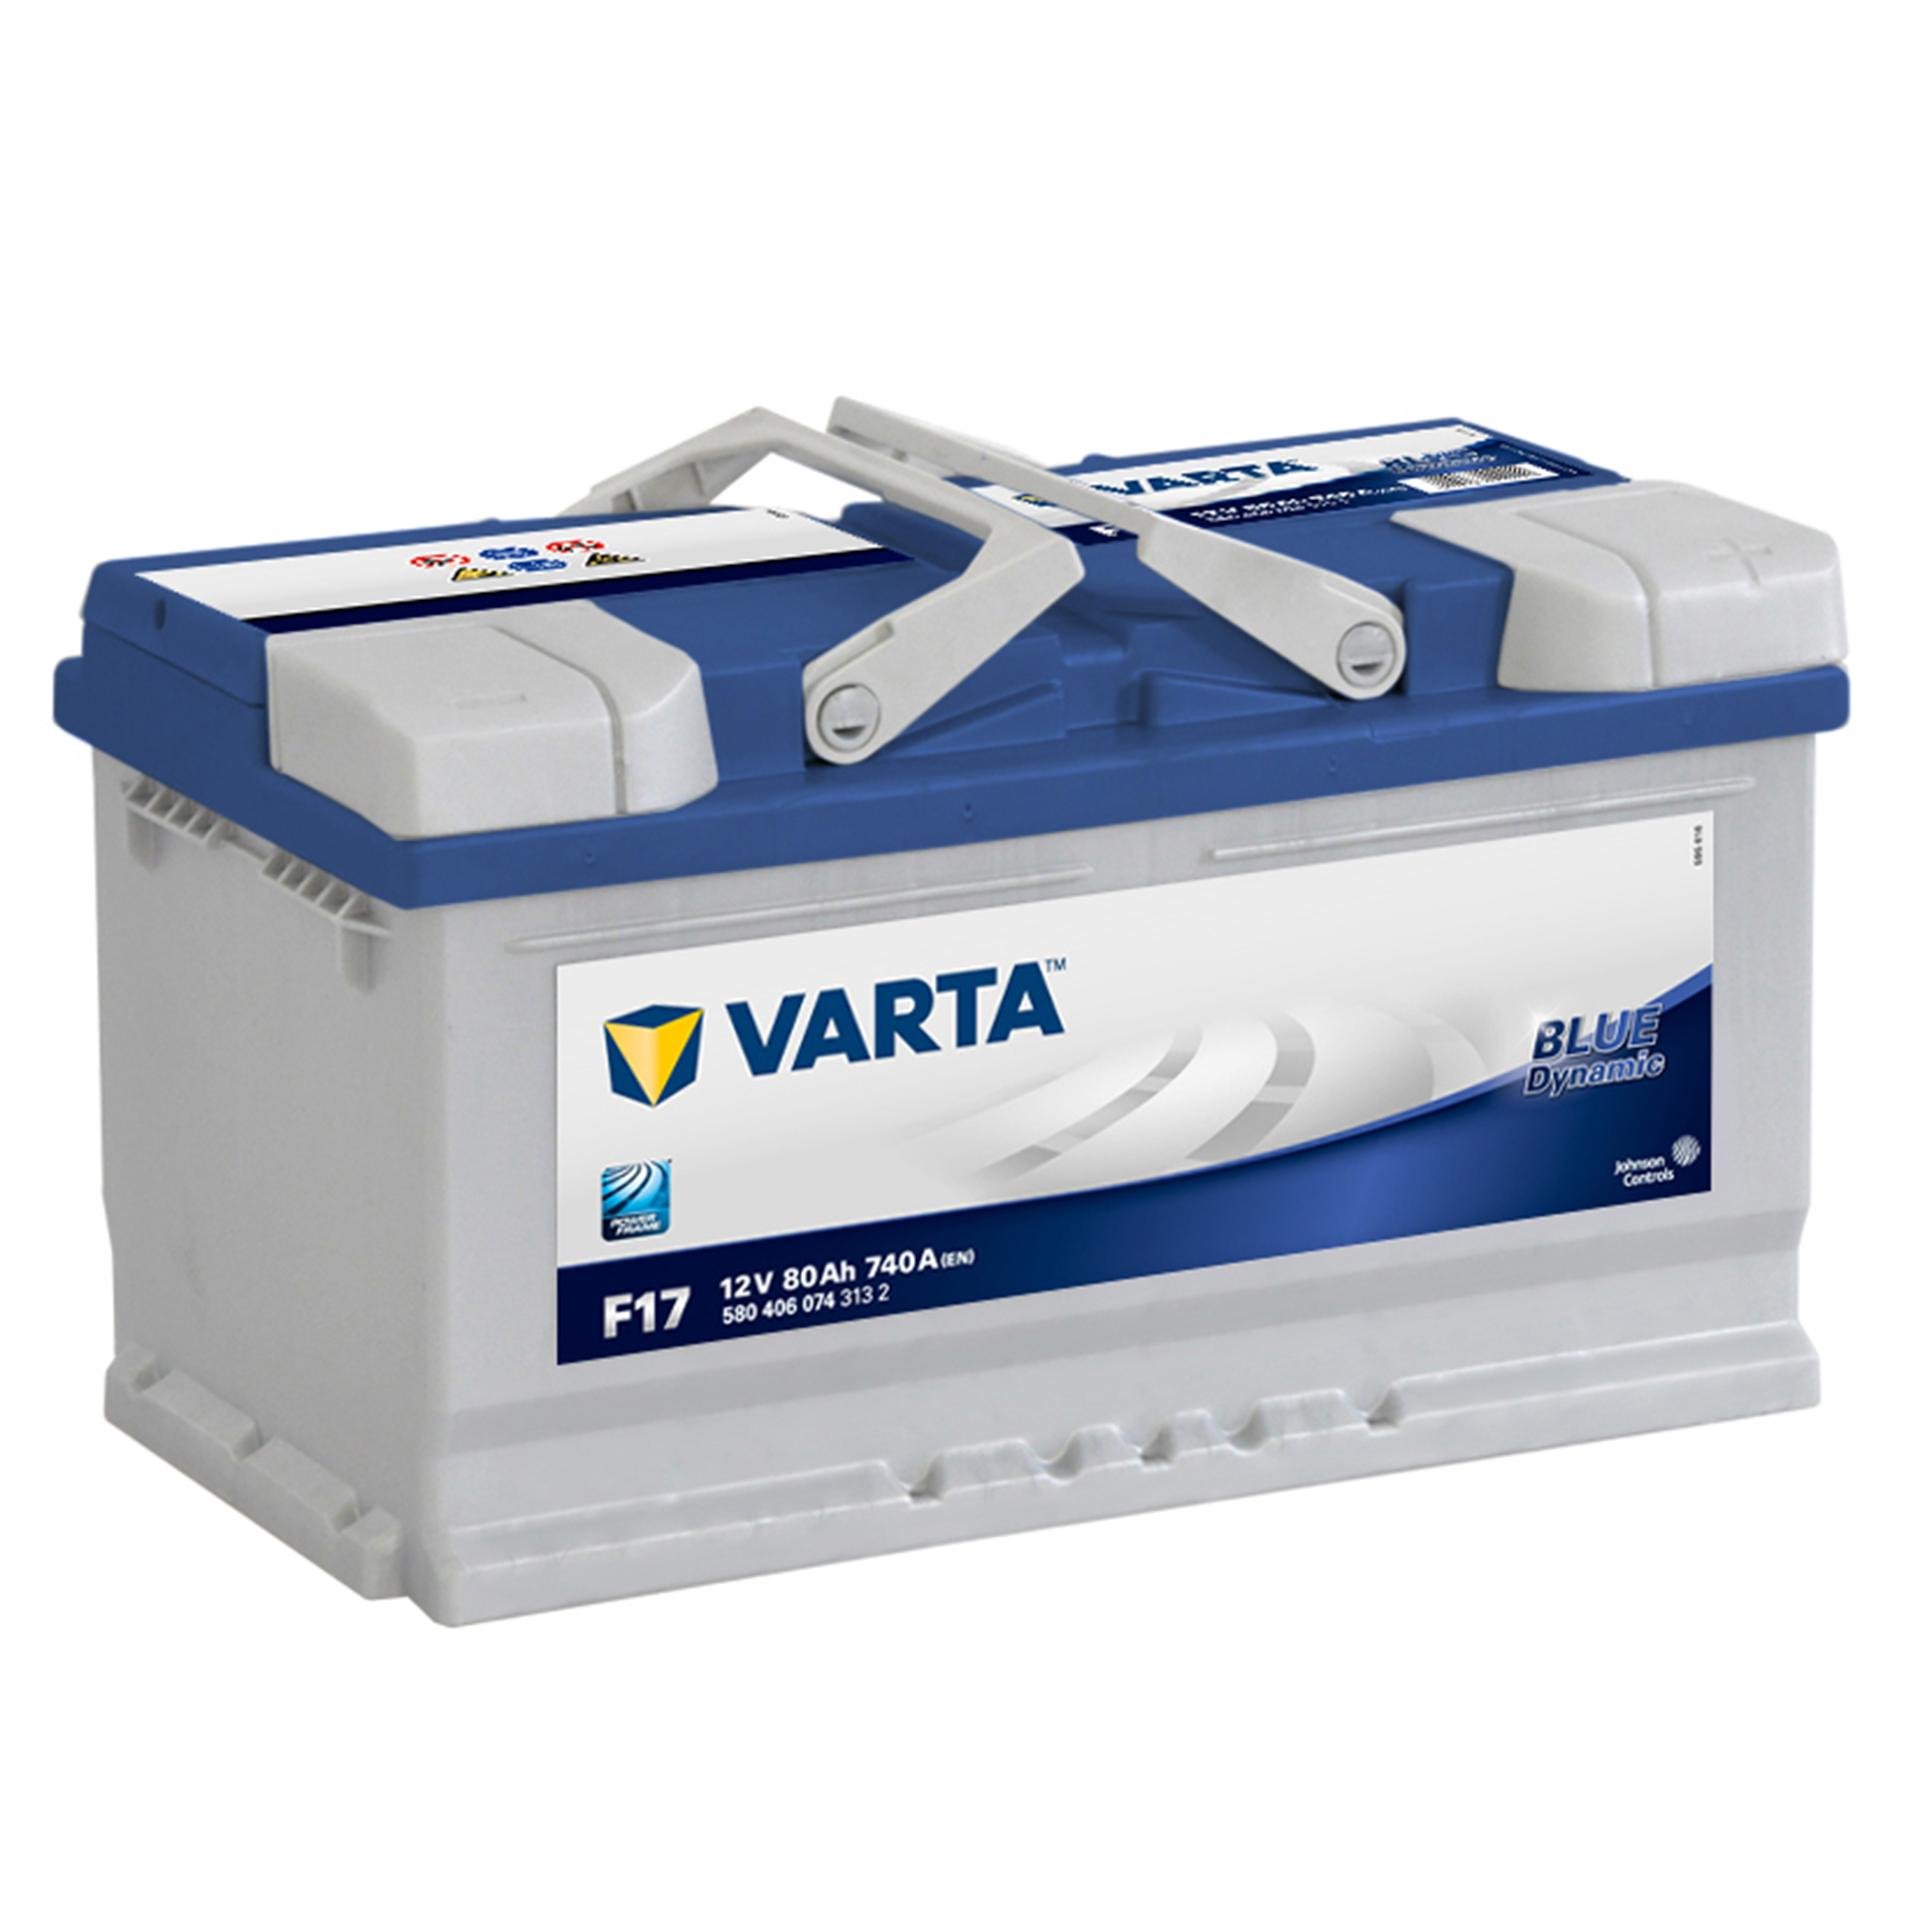 Автомобильный аккумулятор dynamic. Varta 80ah 740a. Varta Blue Dynamic 80ah 740a (em). Varta 75ah. Varta f17 12v 80ah 740a.